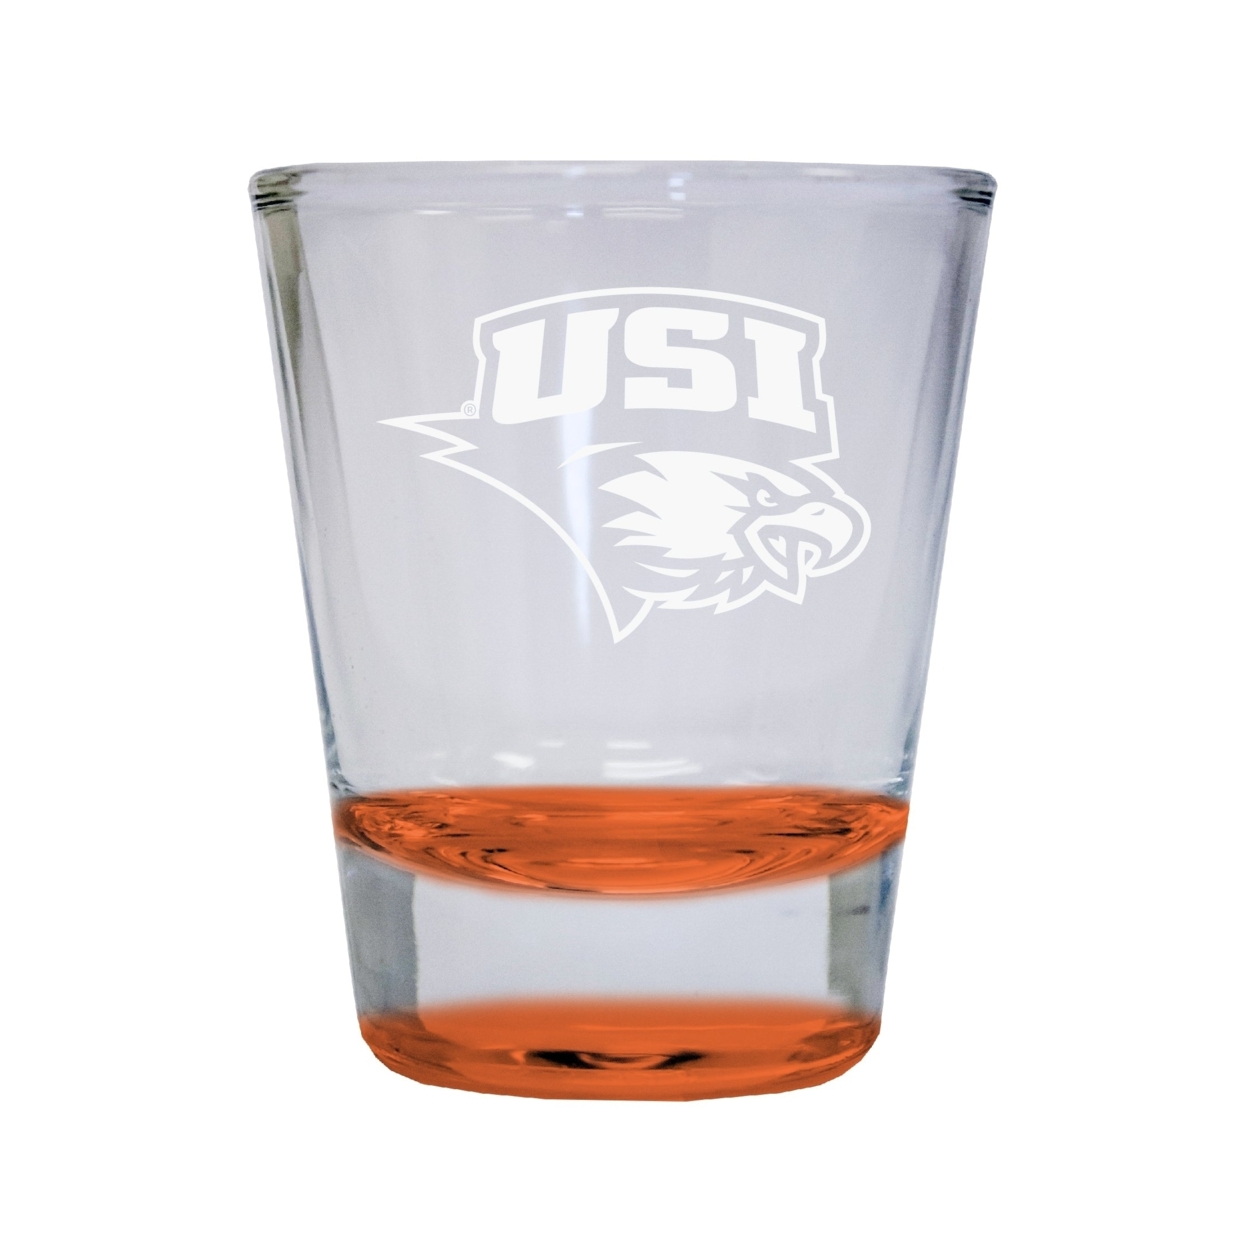 University Of Southern Indiana Etched Round Shot Glass 2 Oz Orange